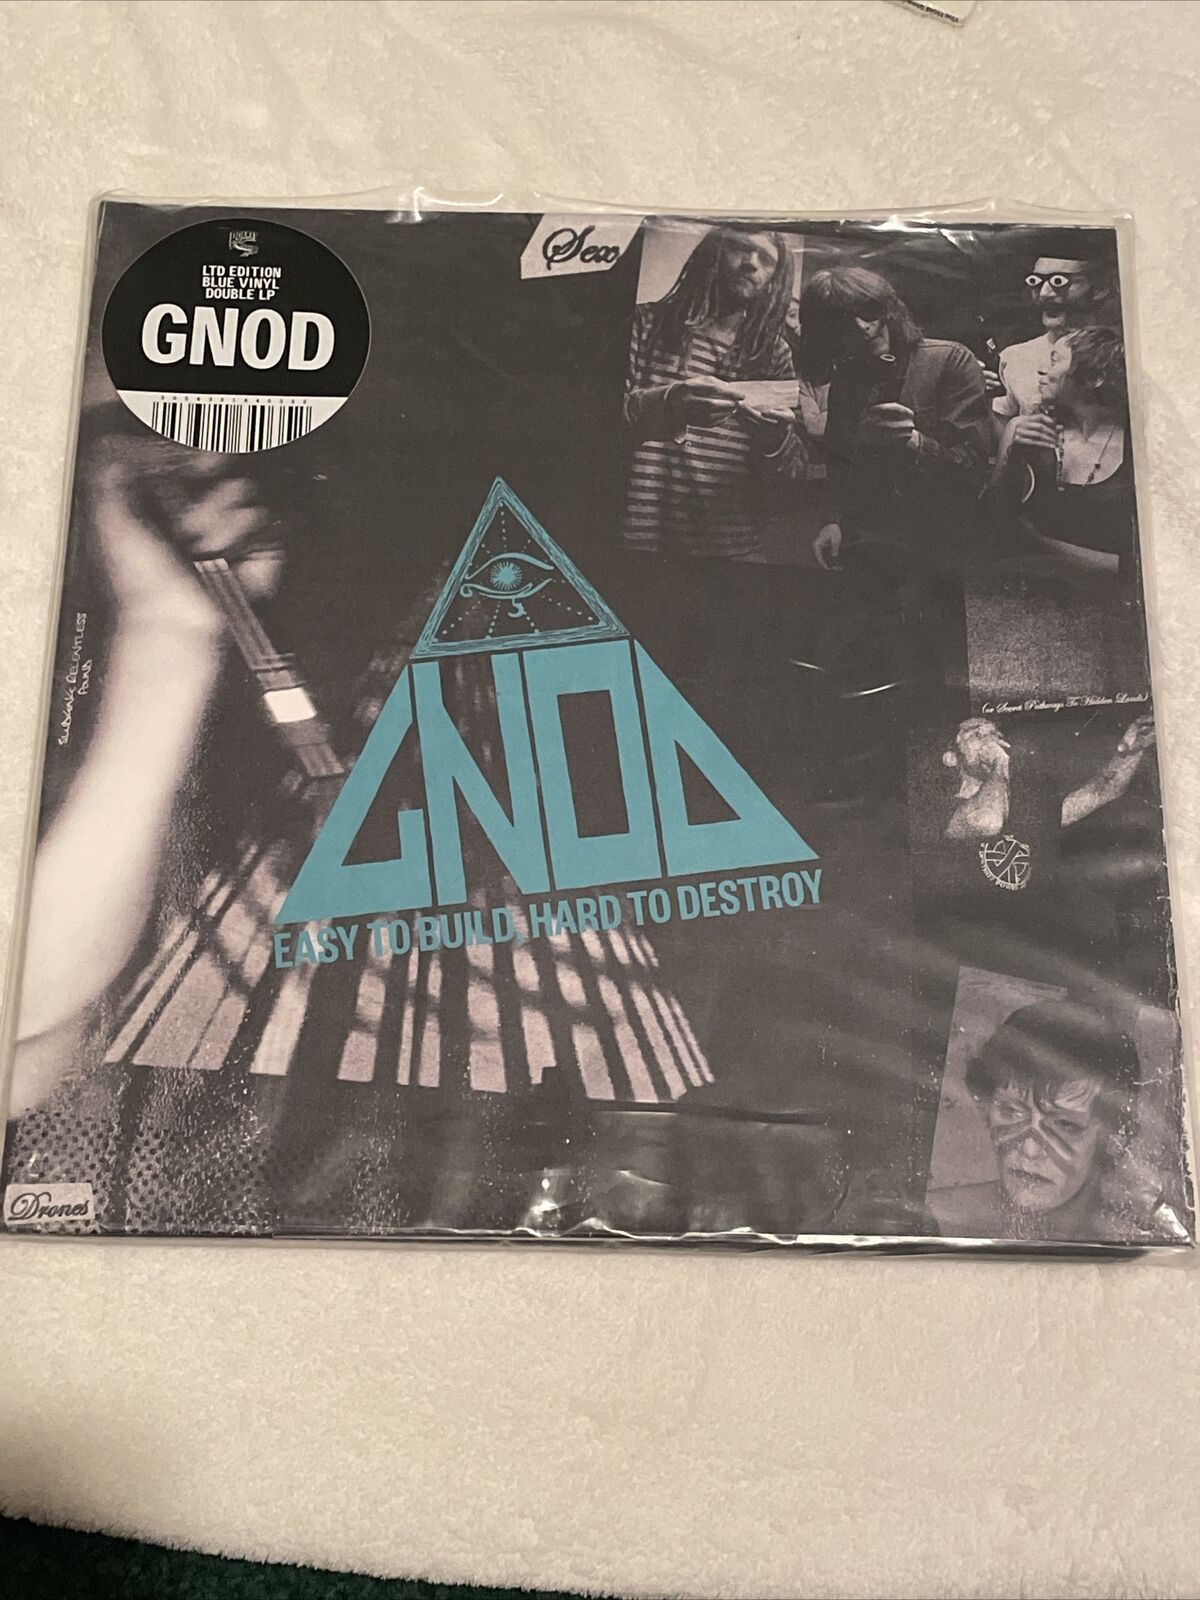 Gnod. Easy To Build, Hard To Destroy. Ltd Edition Blue Vinyl Double LP Near Mint